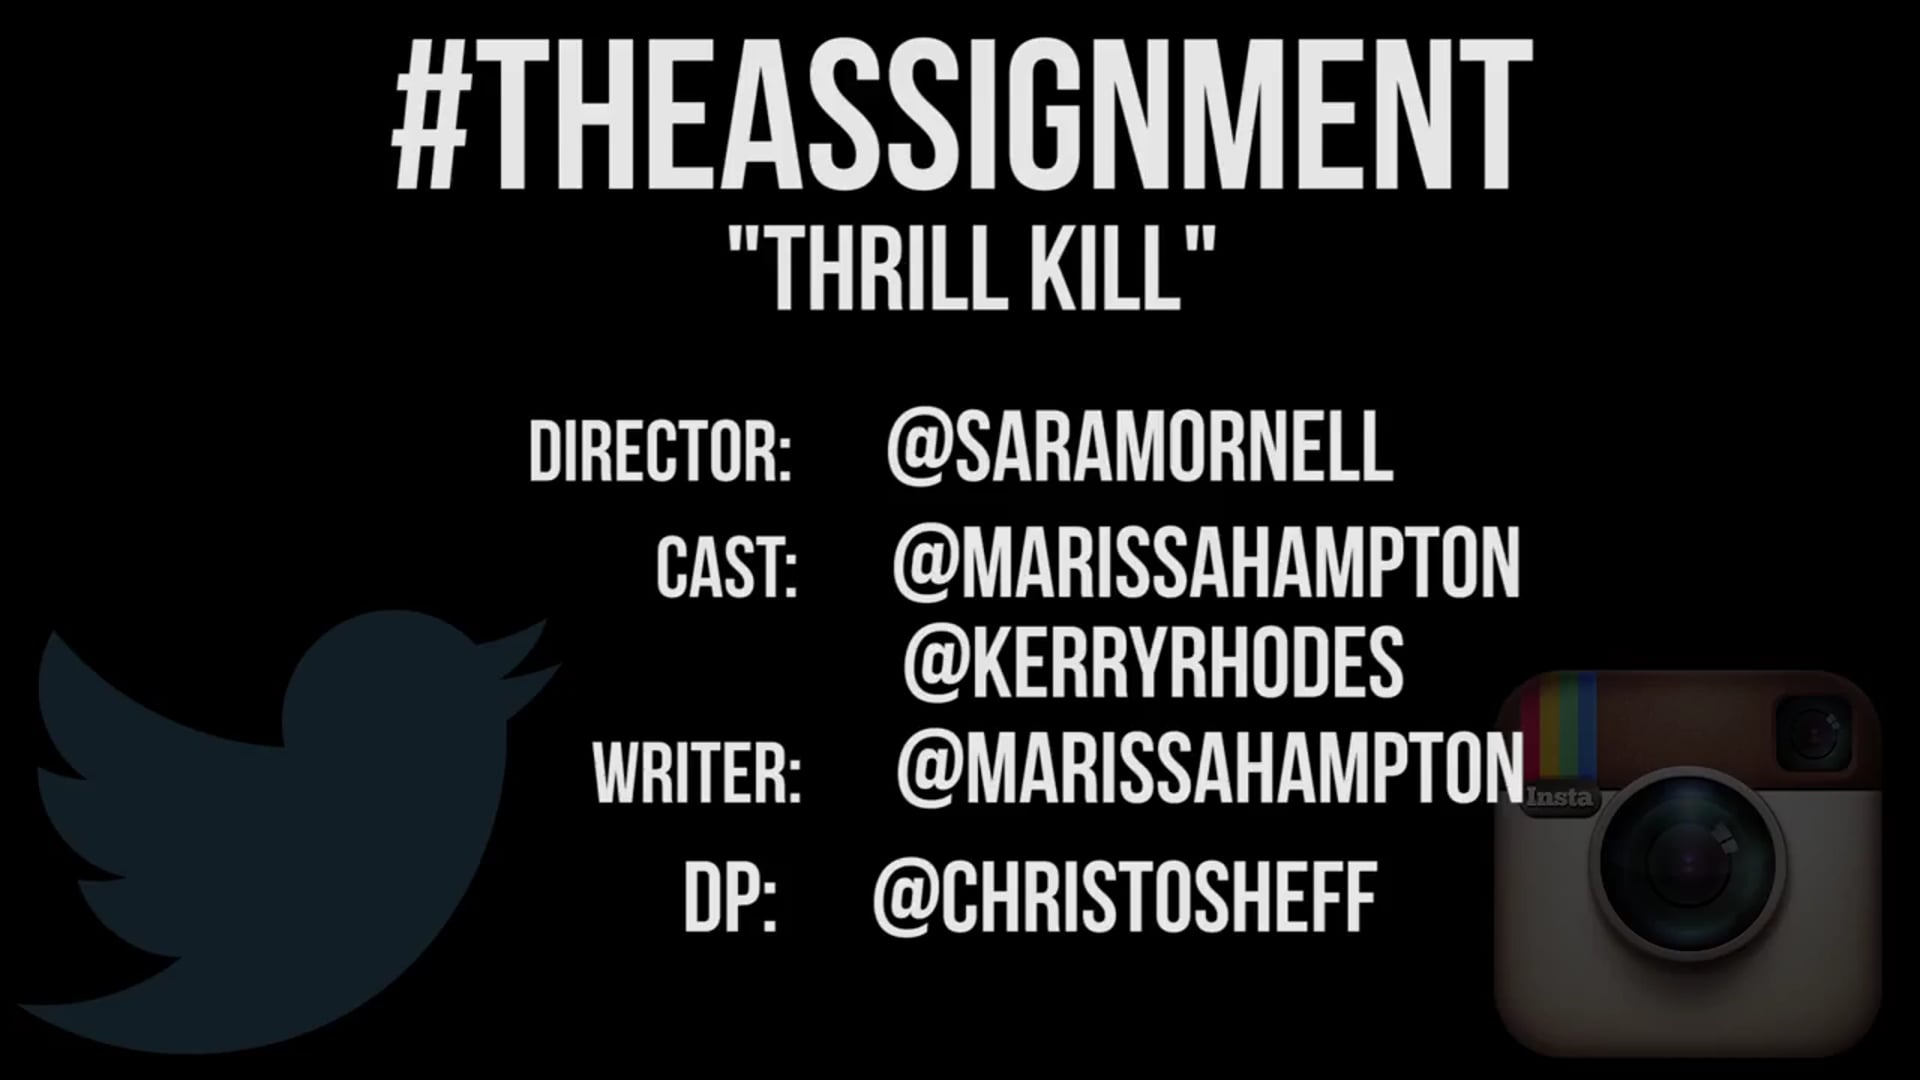 Thrill Kill #TheAssignment